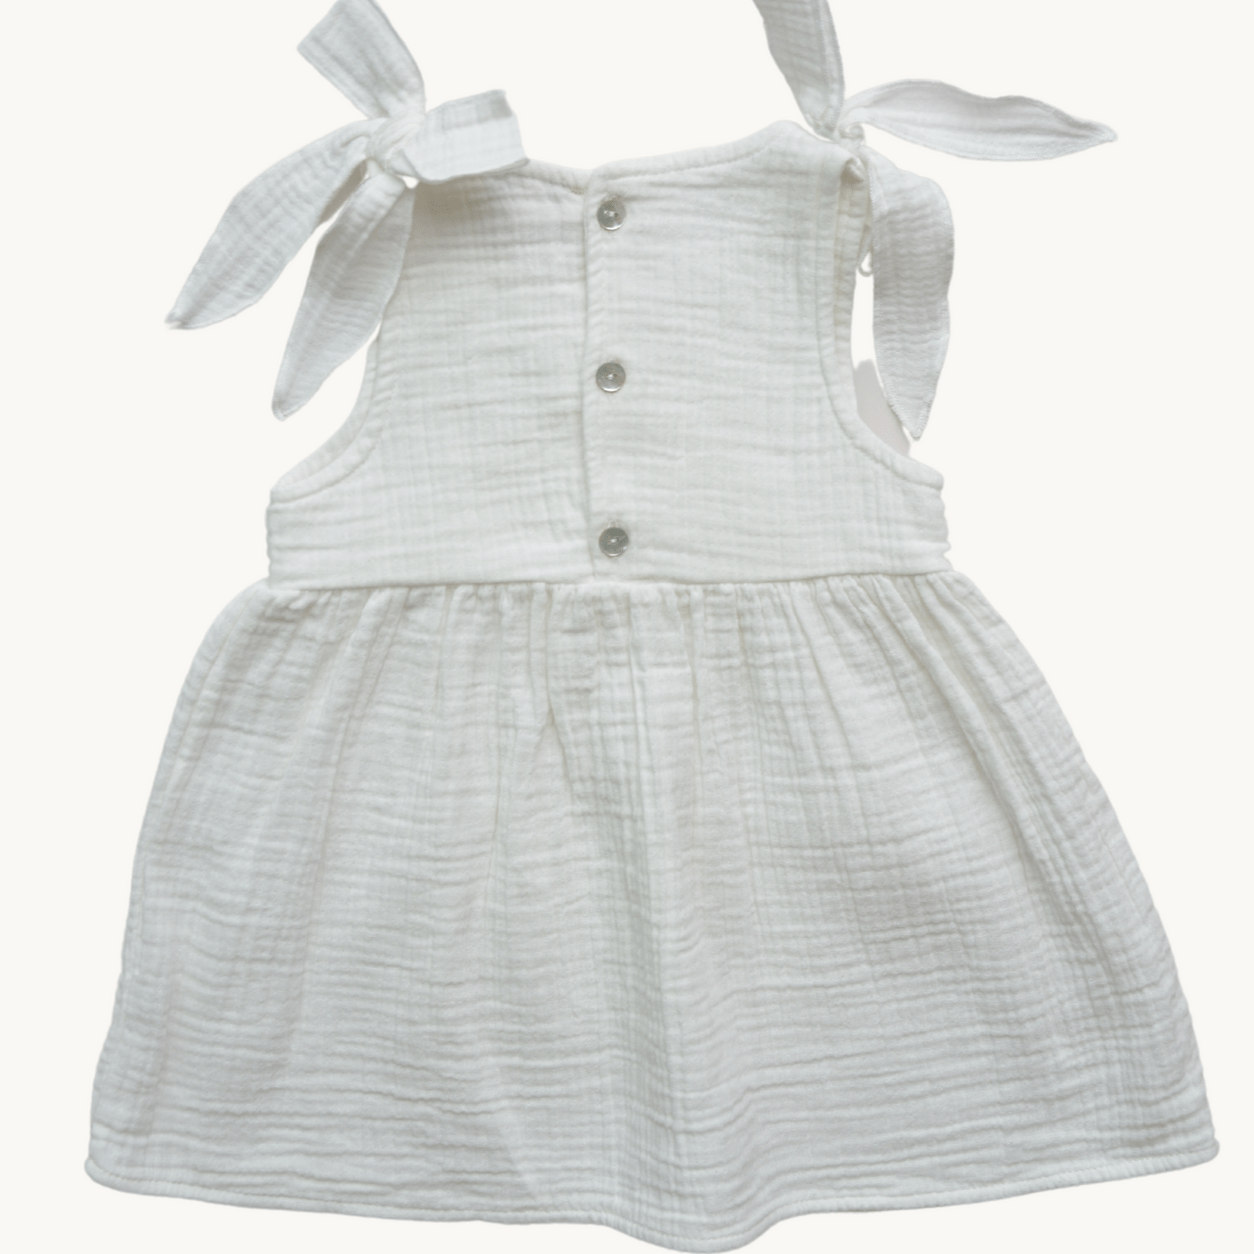 Eli + Nev Dress Shoulder Tie Girls Dress (White)